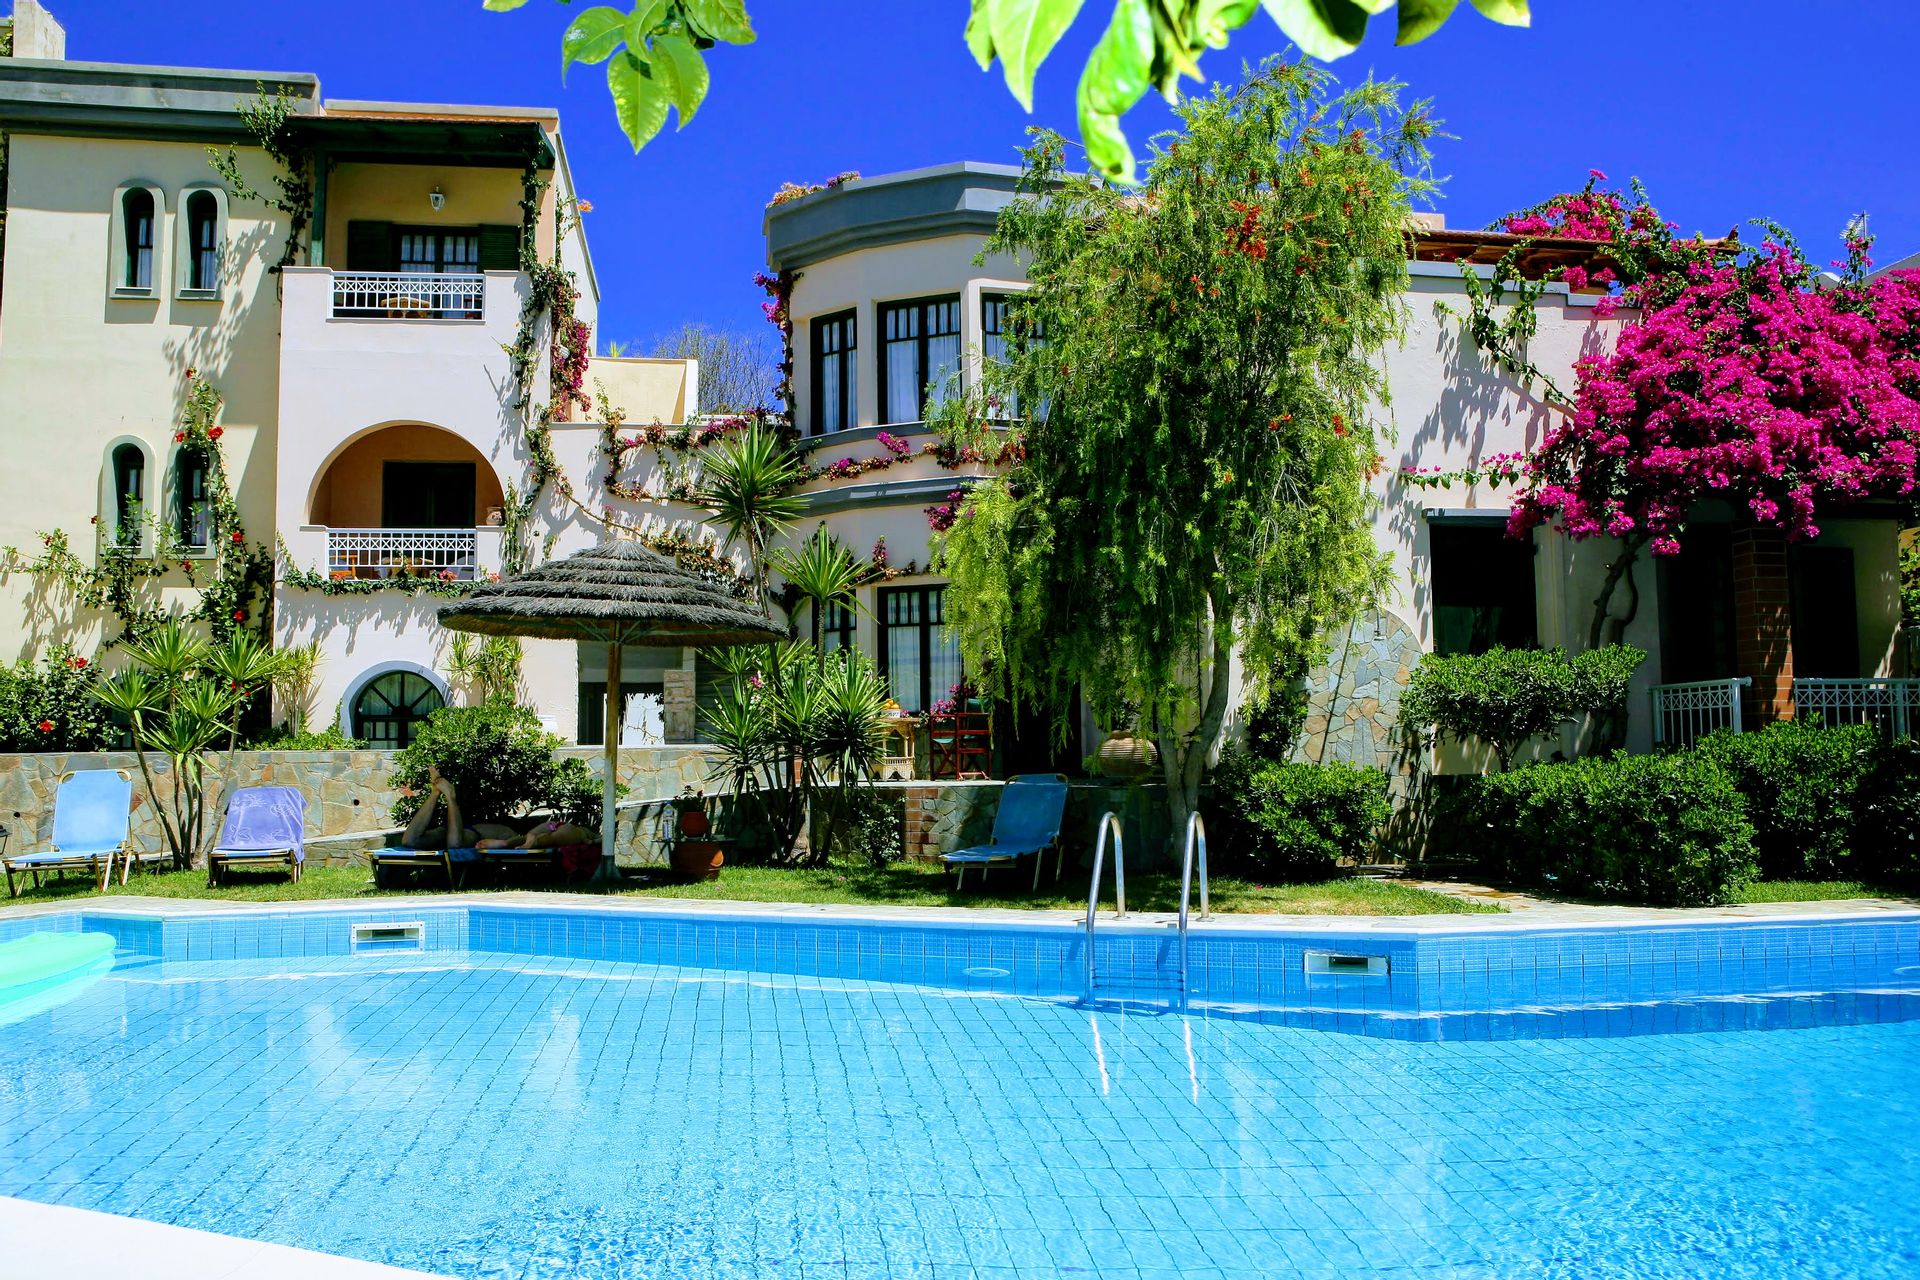 Aquarius Exclusive Apartments - Ηράκλειο, Κρήτη ✦ 3 Ημέρες (2 Διανυκτερεύσεις) ✦ 2 άτομα ✦ Πρωινό ✦ 15/04/2022 έως 30/09/2022 ✦ Κοντά στην παραλία!